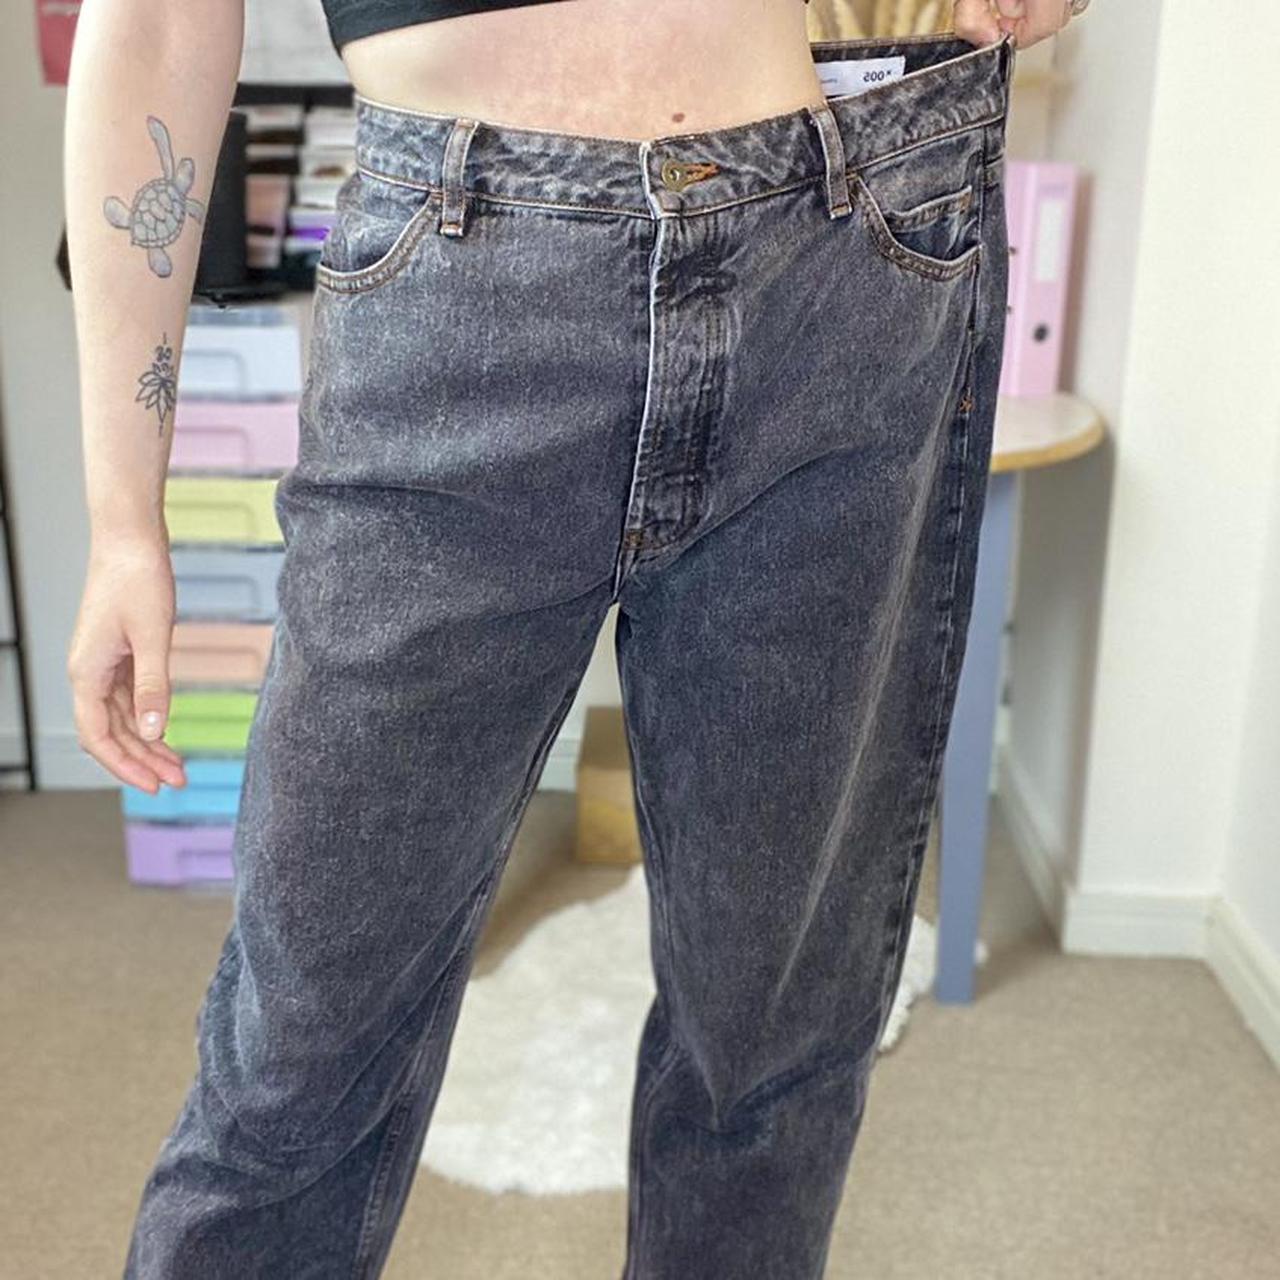 Charcoal grey high waisted boyfriend fit jeans ... - Depop